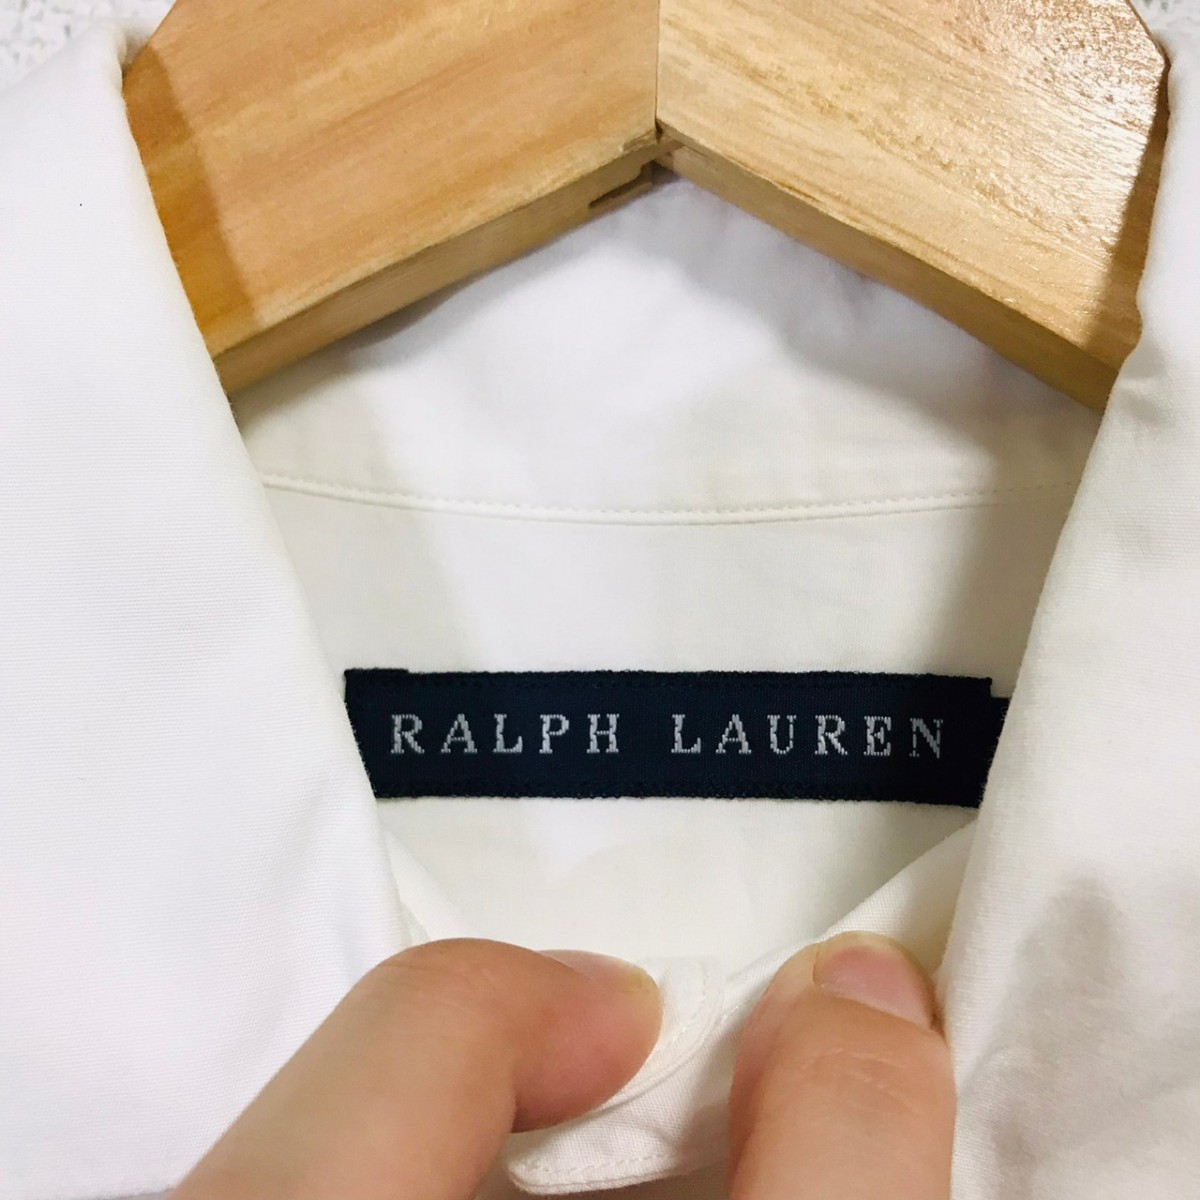 H4049dL RALPH LAUREN Ralph Lauren size 7 (S rank ) short sleeves shirt blouse white shirt cotton 100% cotton shirt cotton blouse 